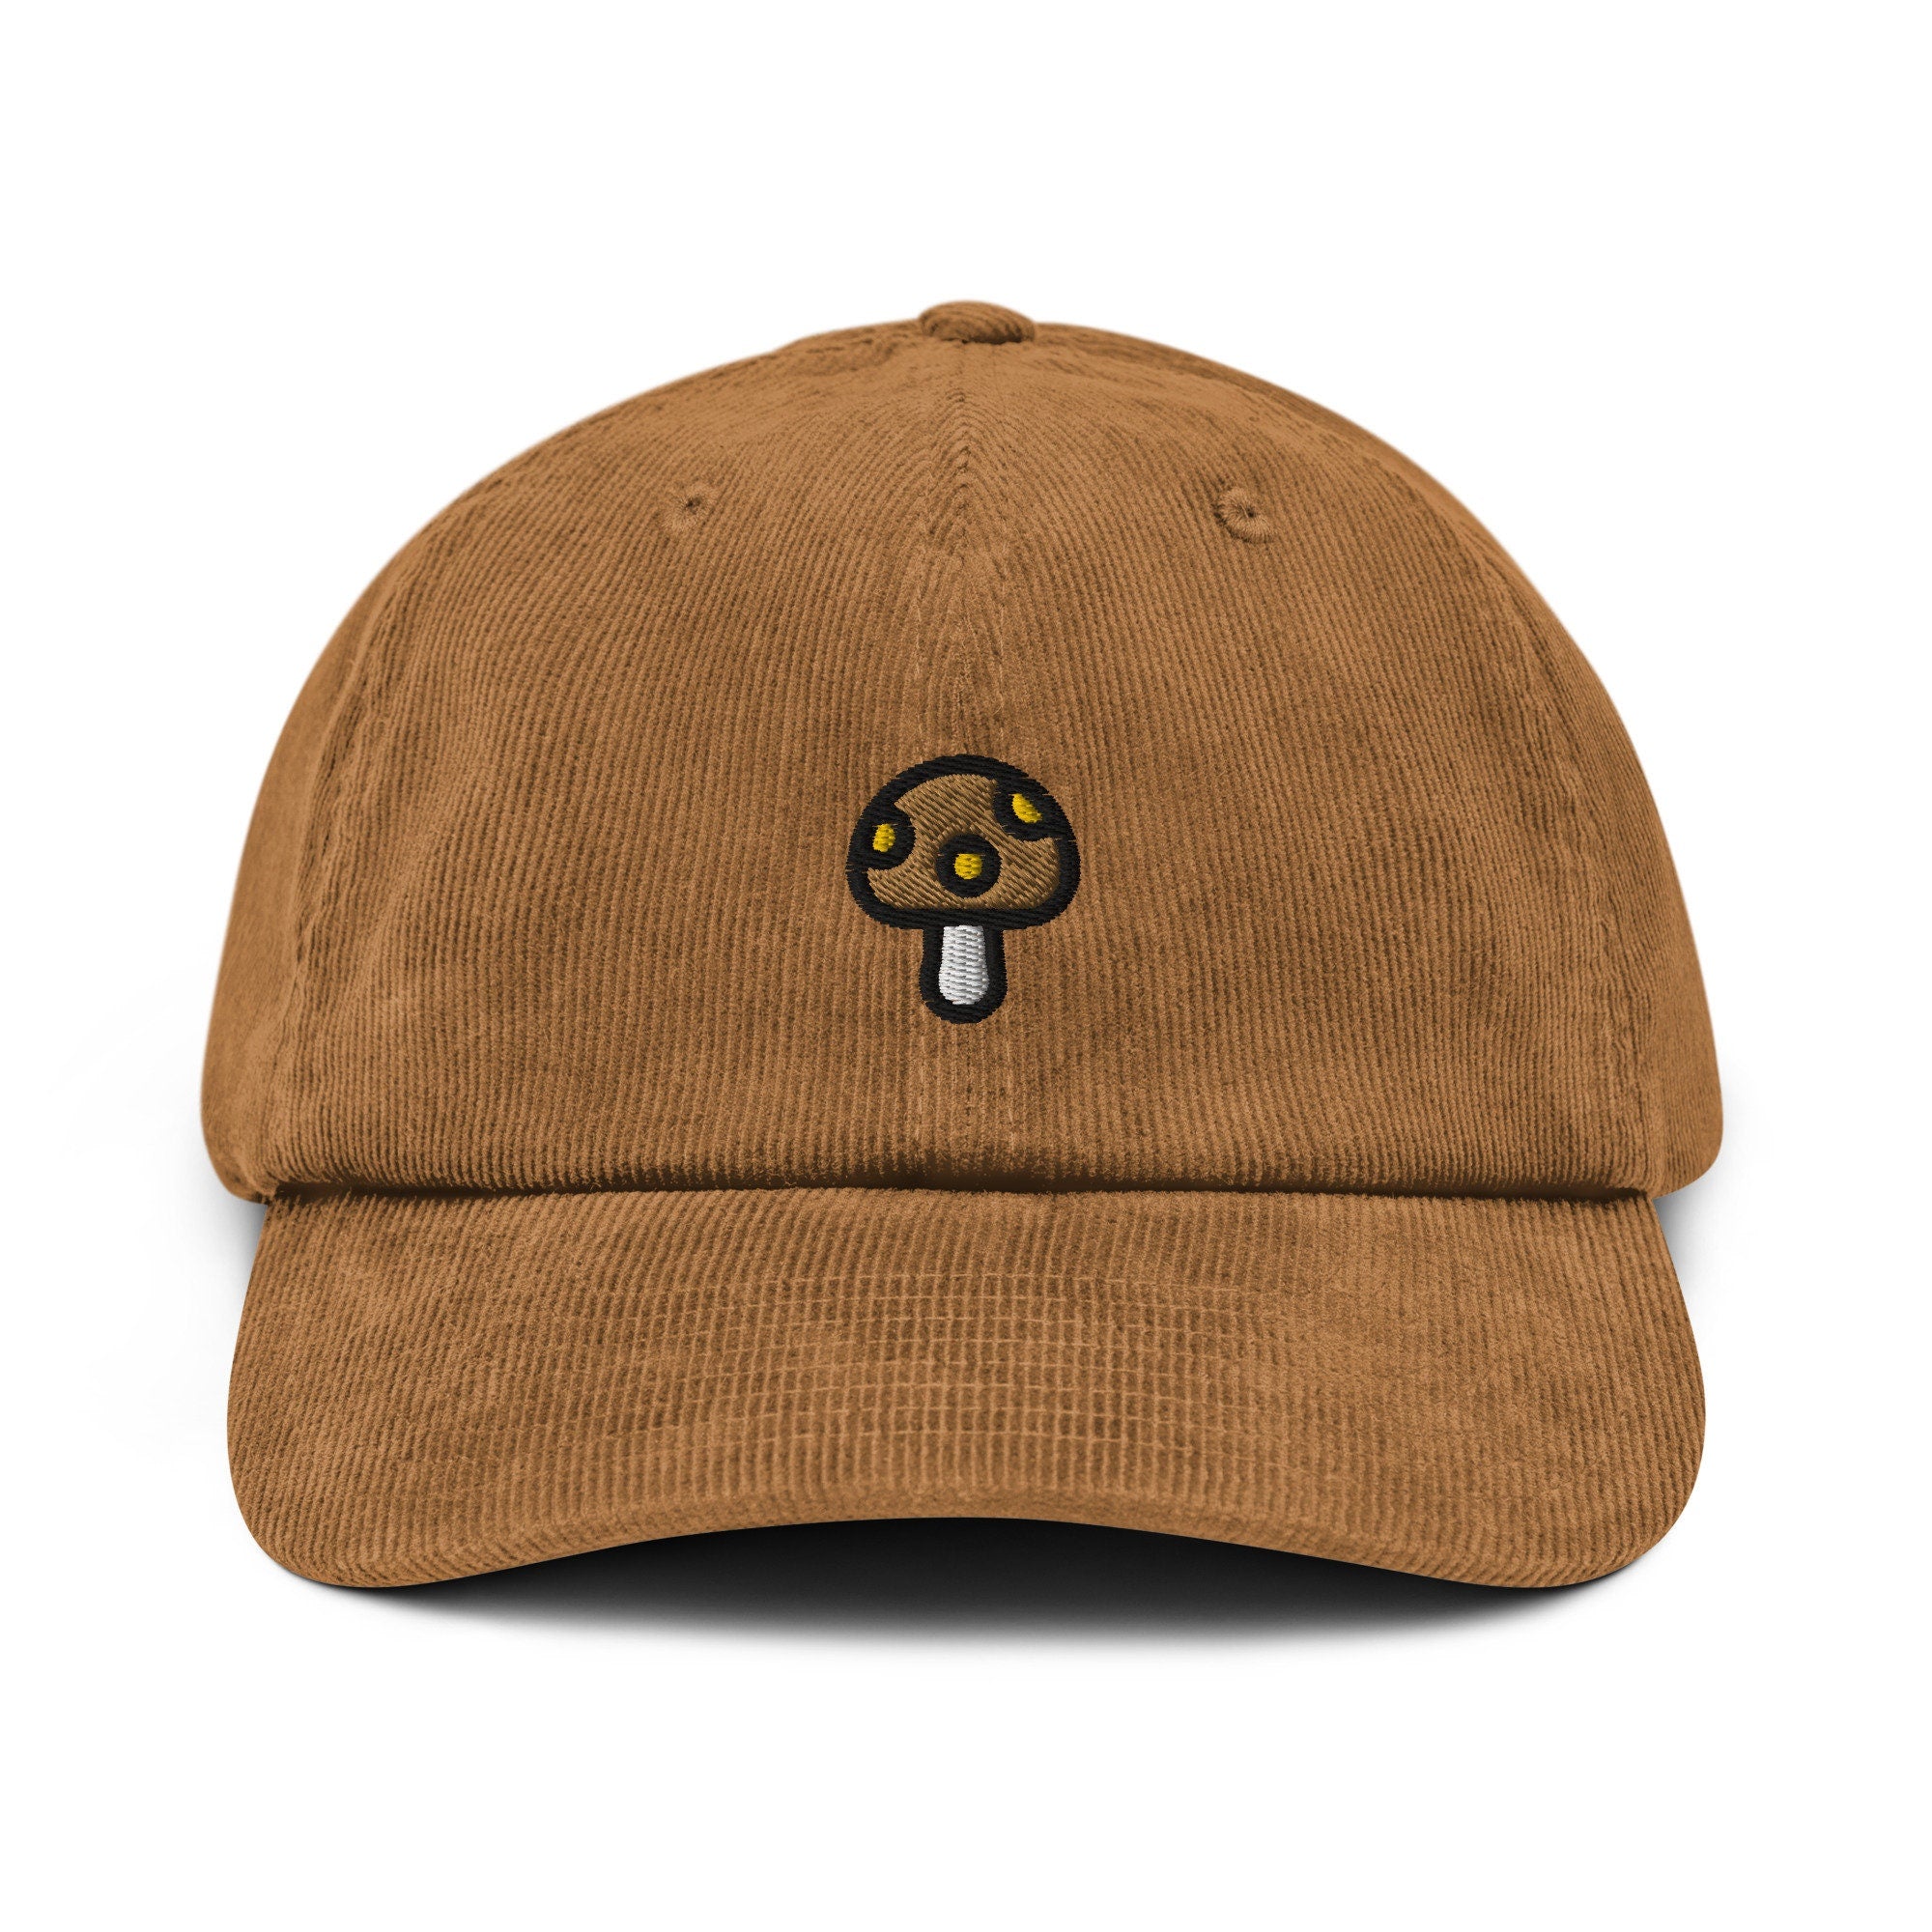 Mushroom Corduroy Hat, Handmade Embroidered Corduroy Dad Cap - Multiple Colors